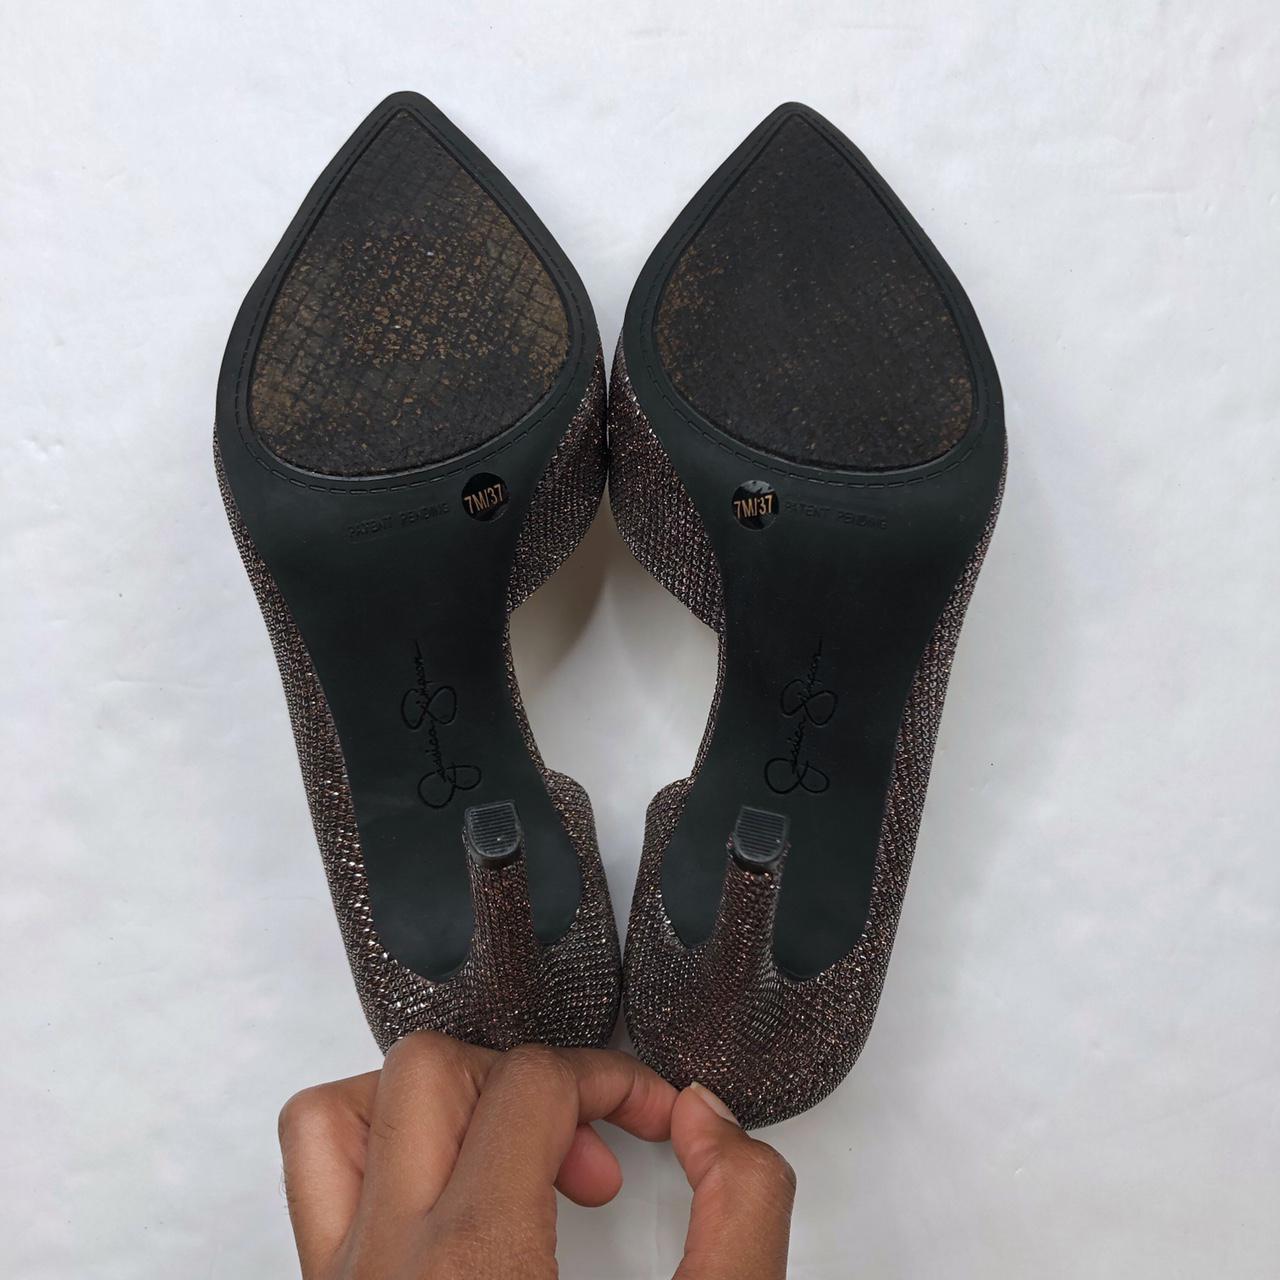 Product Image 3 - Metallic brown silver d’Orsay heels

Brand: